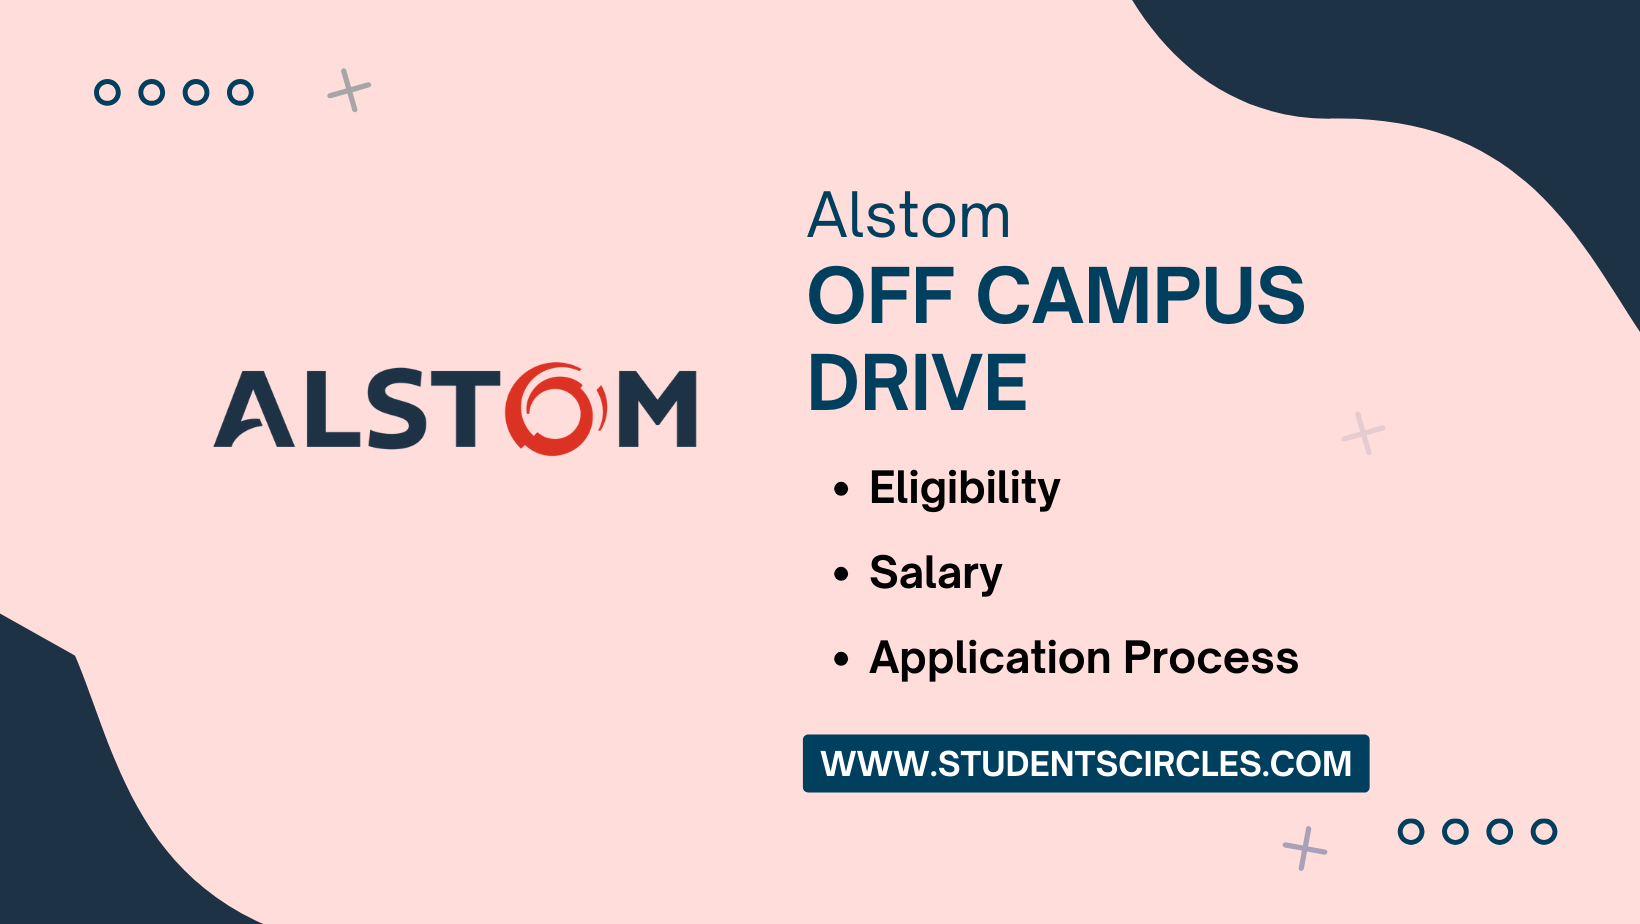 Alstom Off Campus Drive